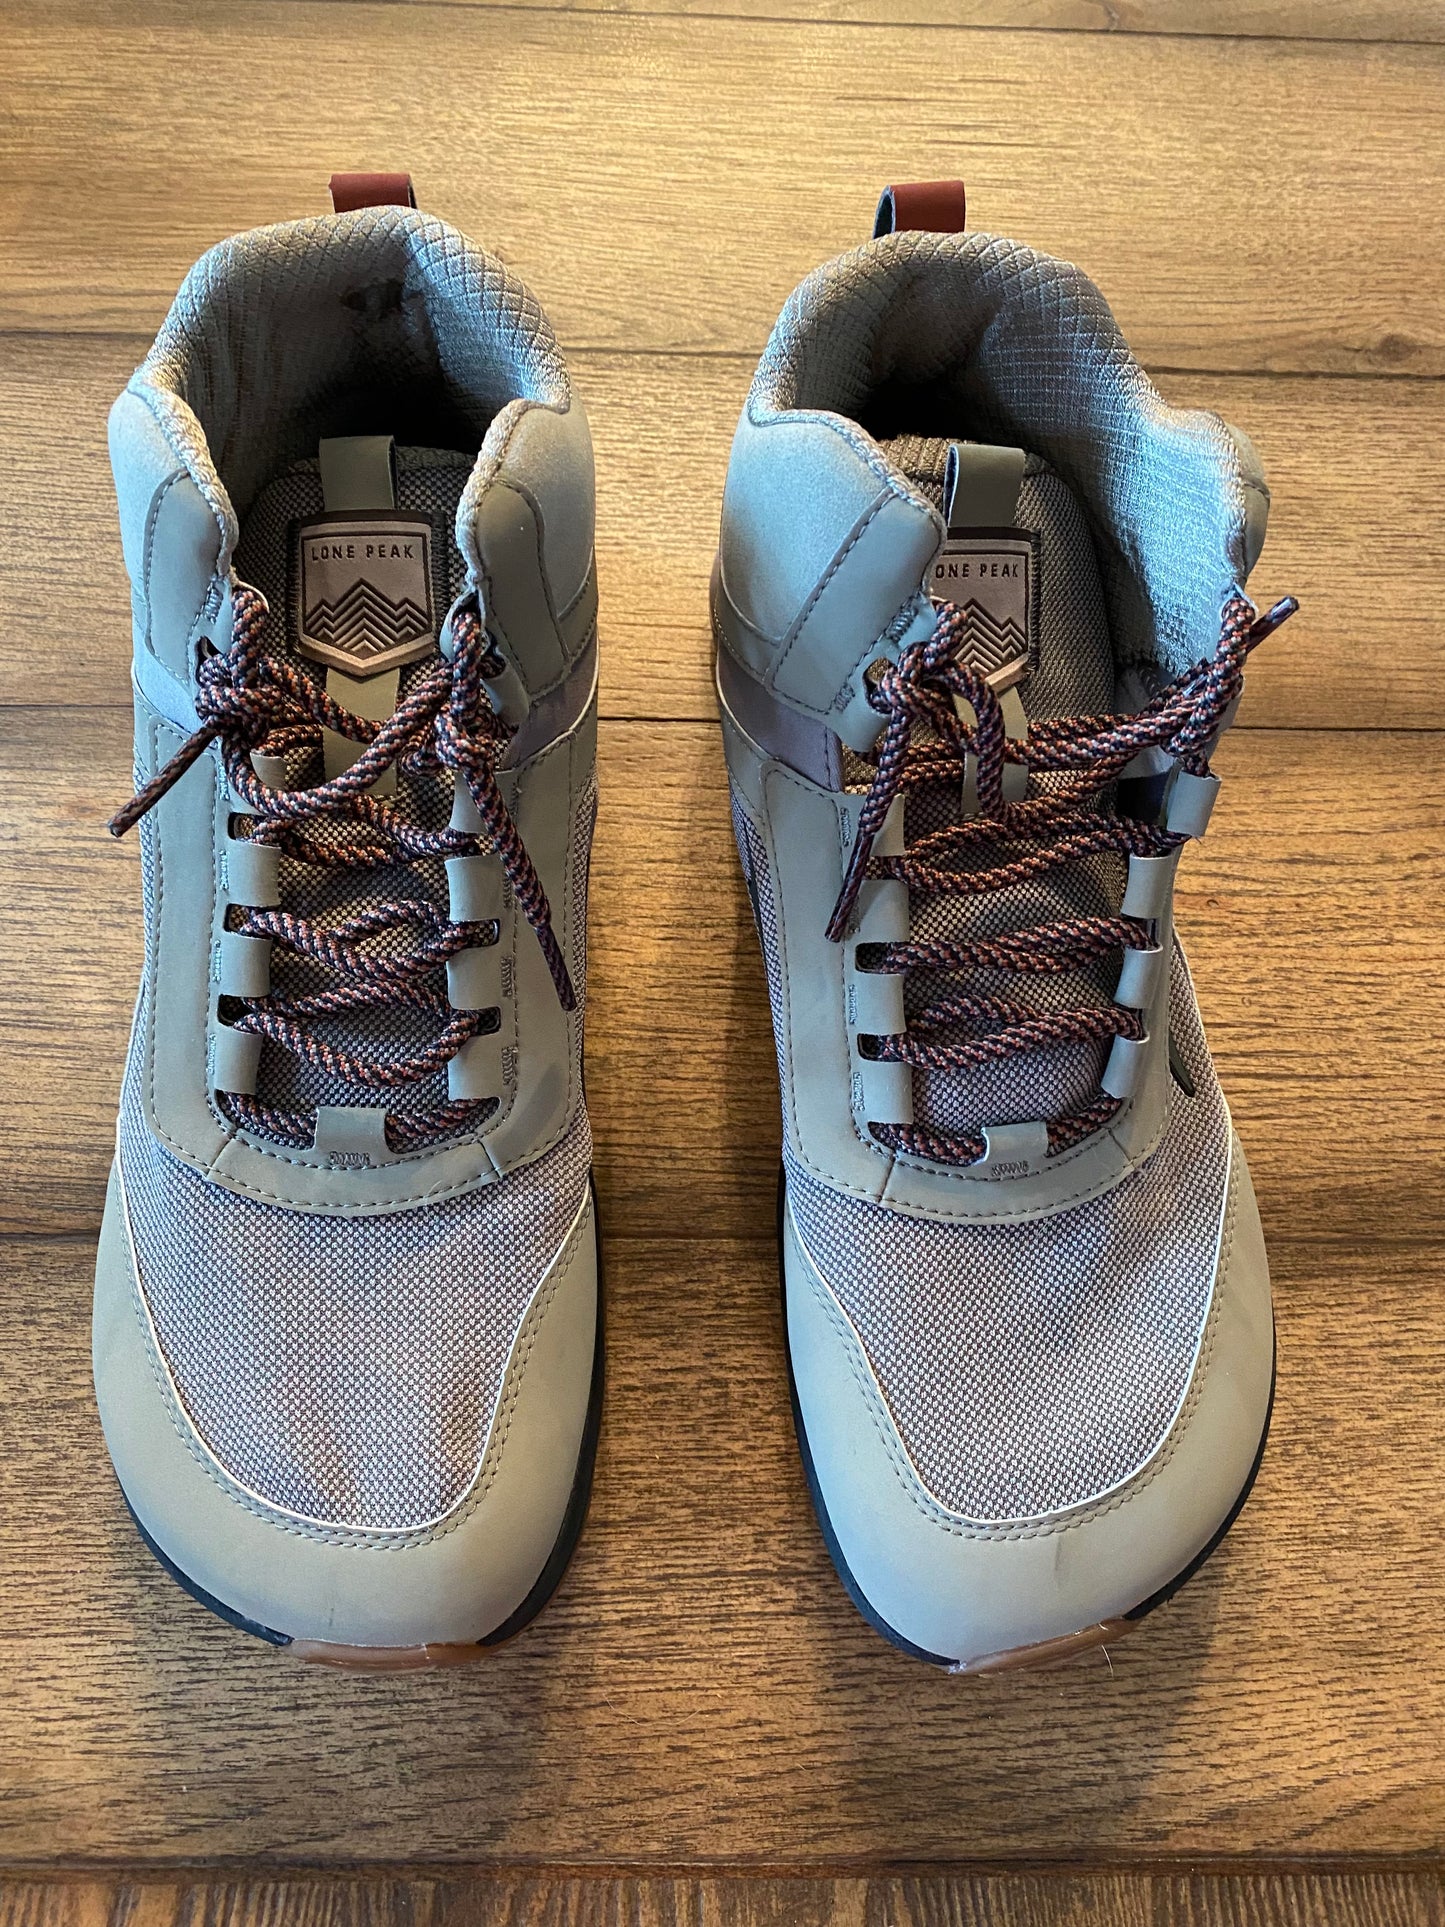 ALTRA Lone Peak Hikers Men's Shoe Size 11.5